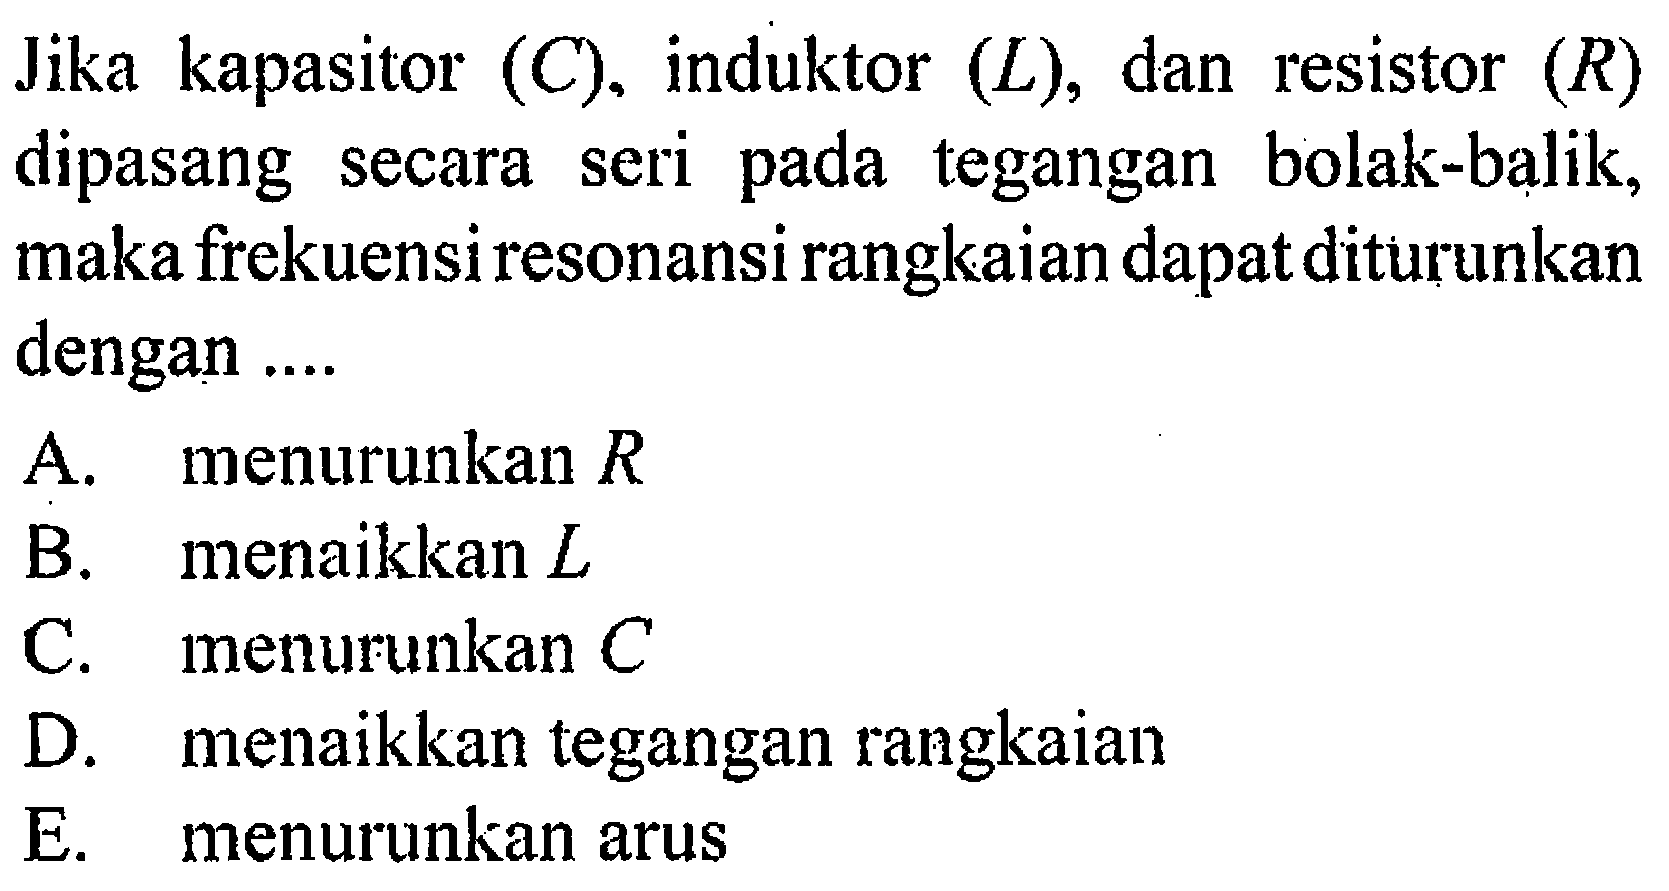 Jika kapasitor (C). induktor (L), dan resistor (R) dipasang secara seri tegangan bolak-balik, maka frekuensiresonansirangkaian dapatditurunkan dengan